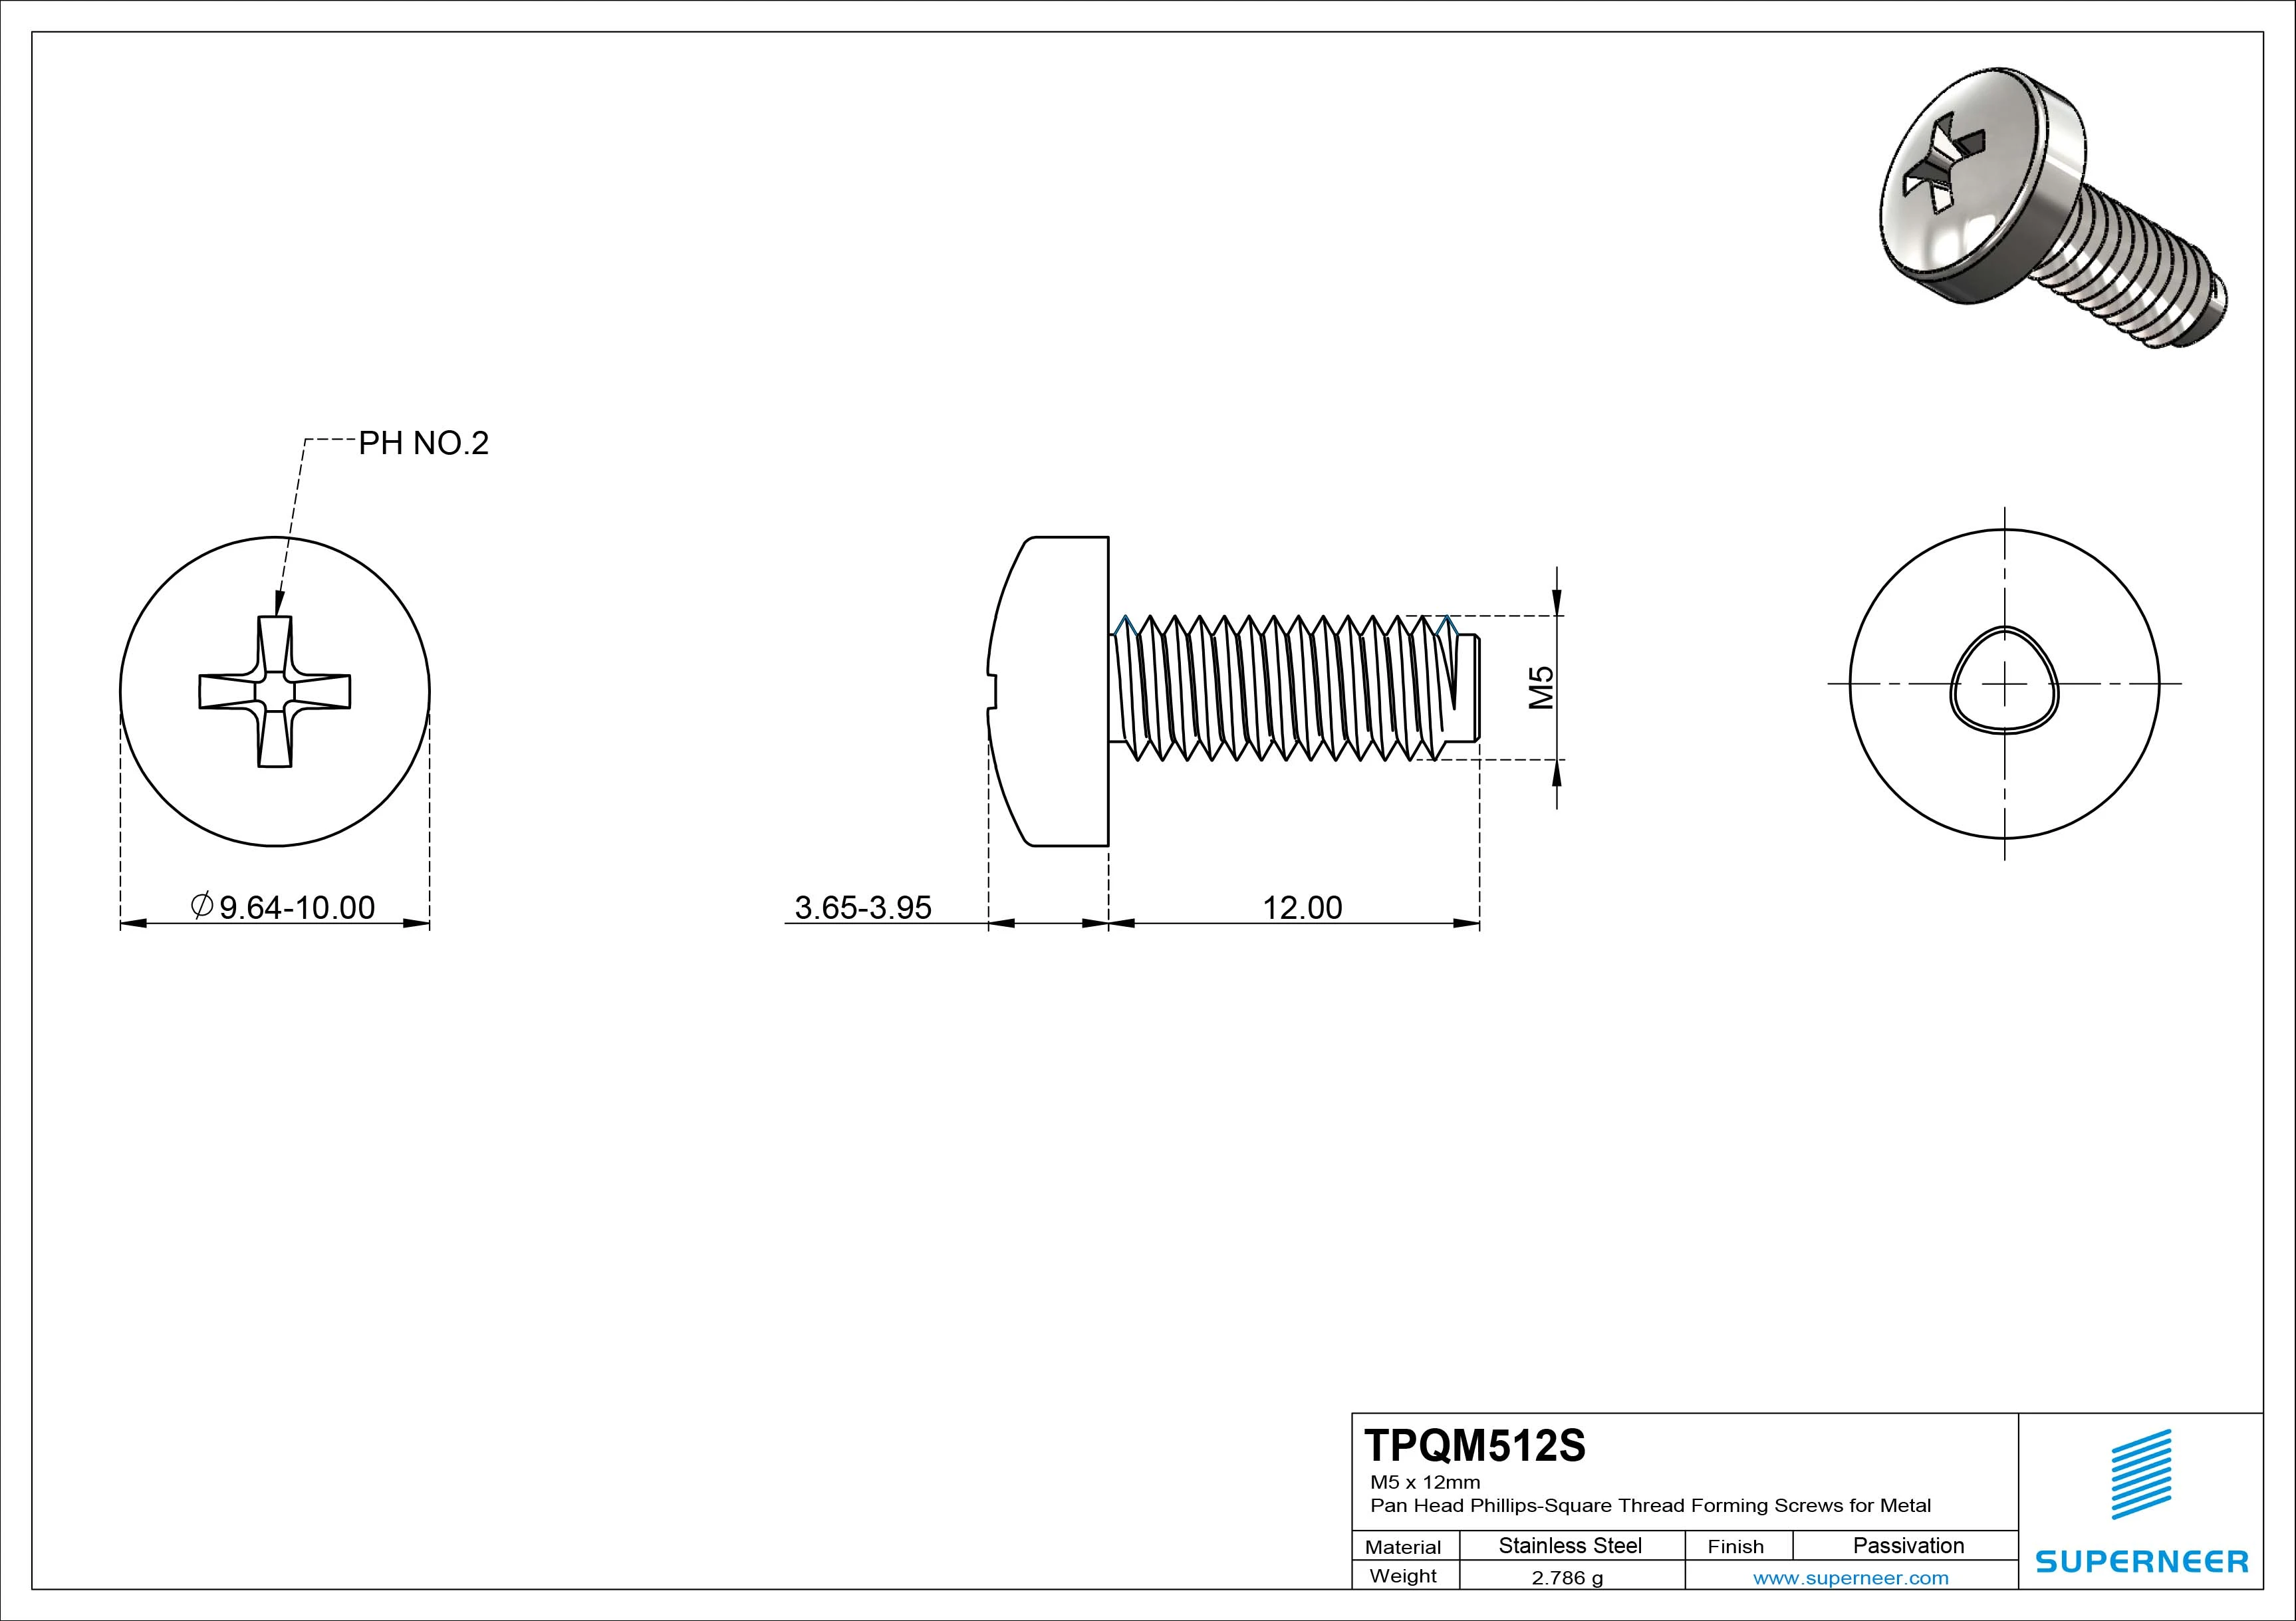 M5 × 12mm Pan Head Phillips-Square Thread Forming Screws for Metal SUS304 Stainless Steel Inox